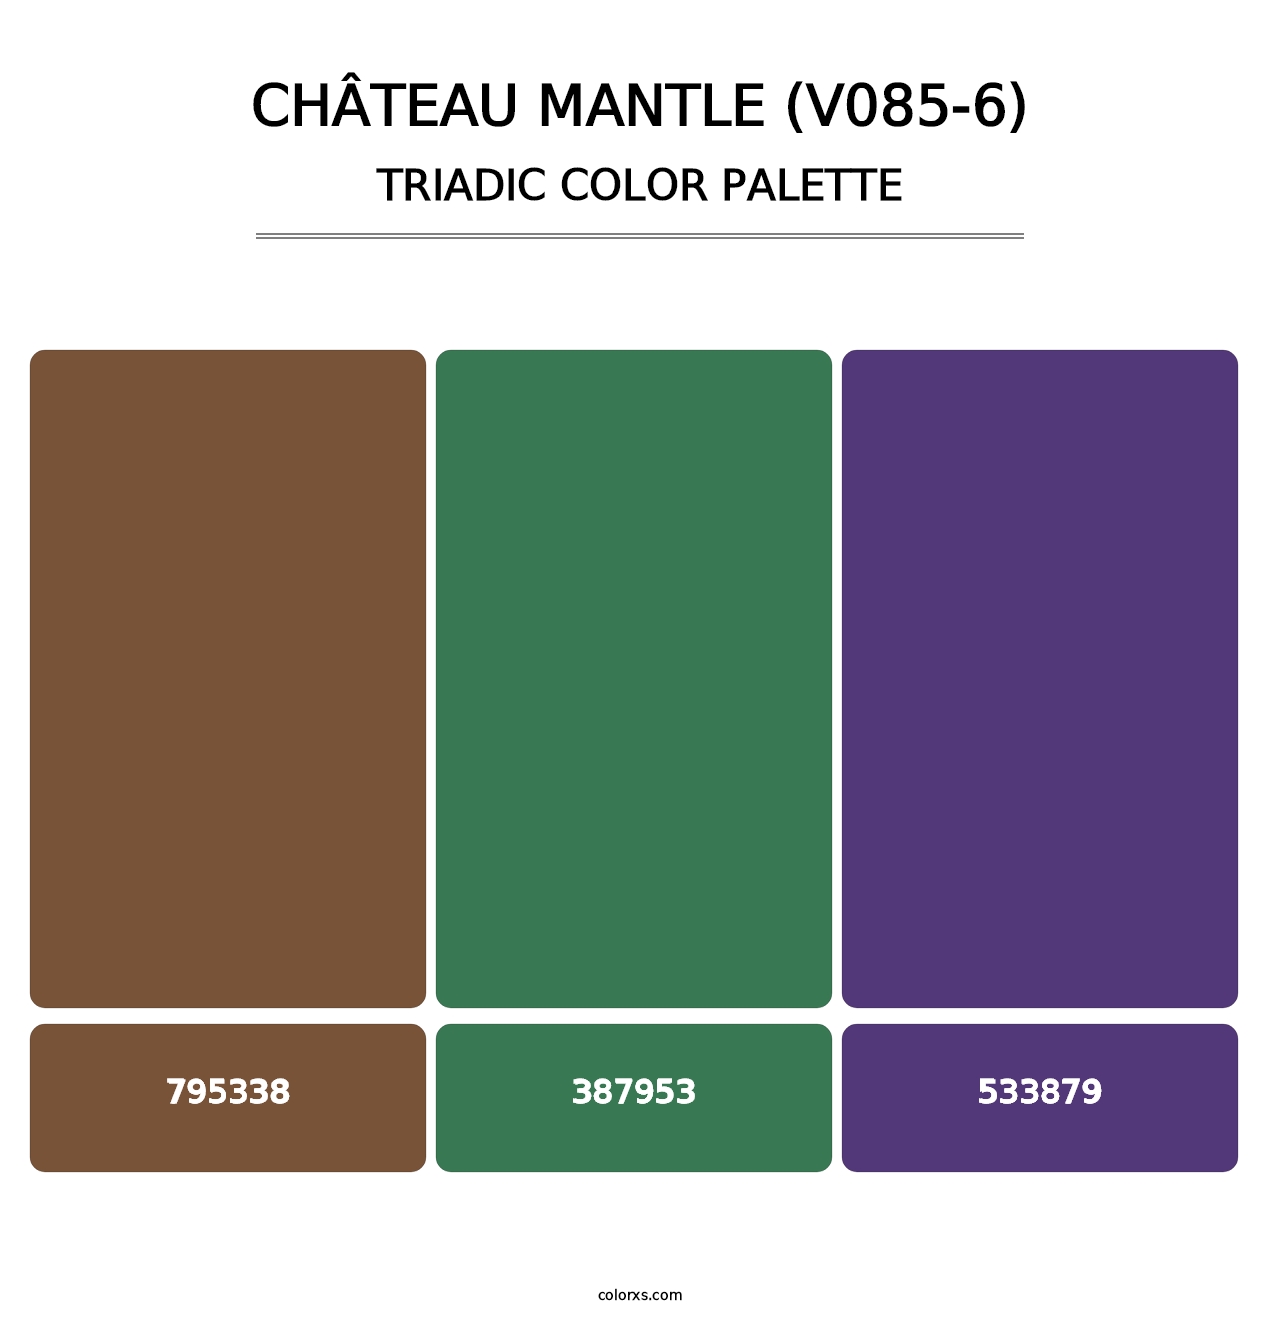 Château Mantle (V085-6) - Triadic Color Palette